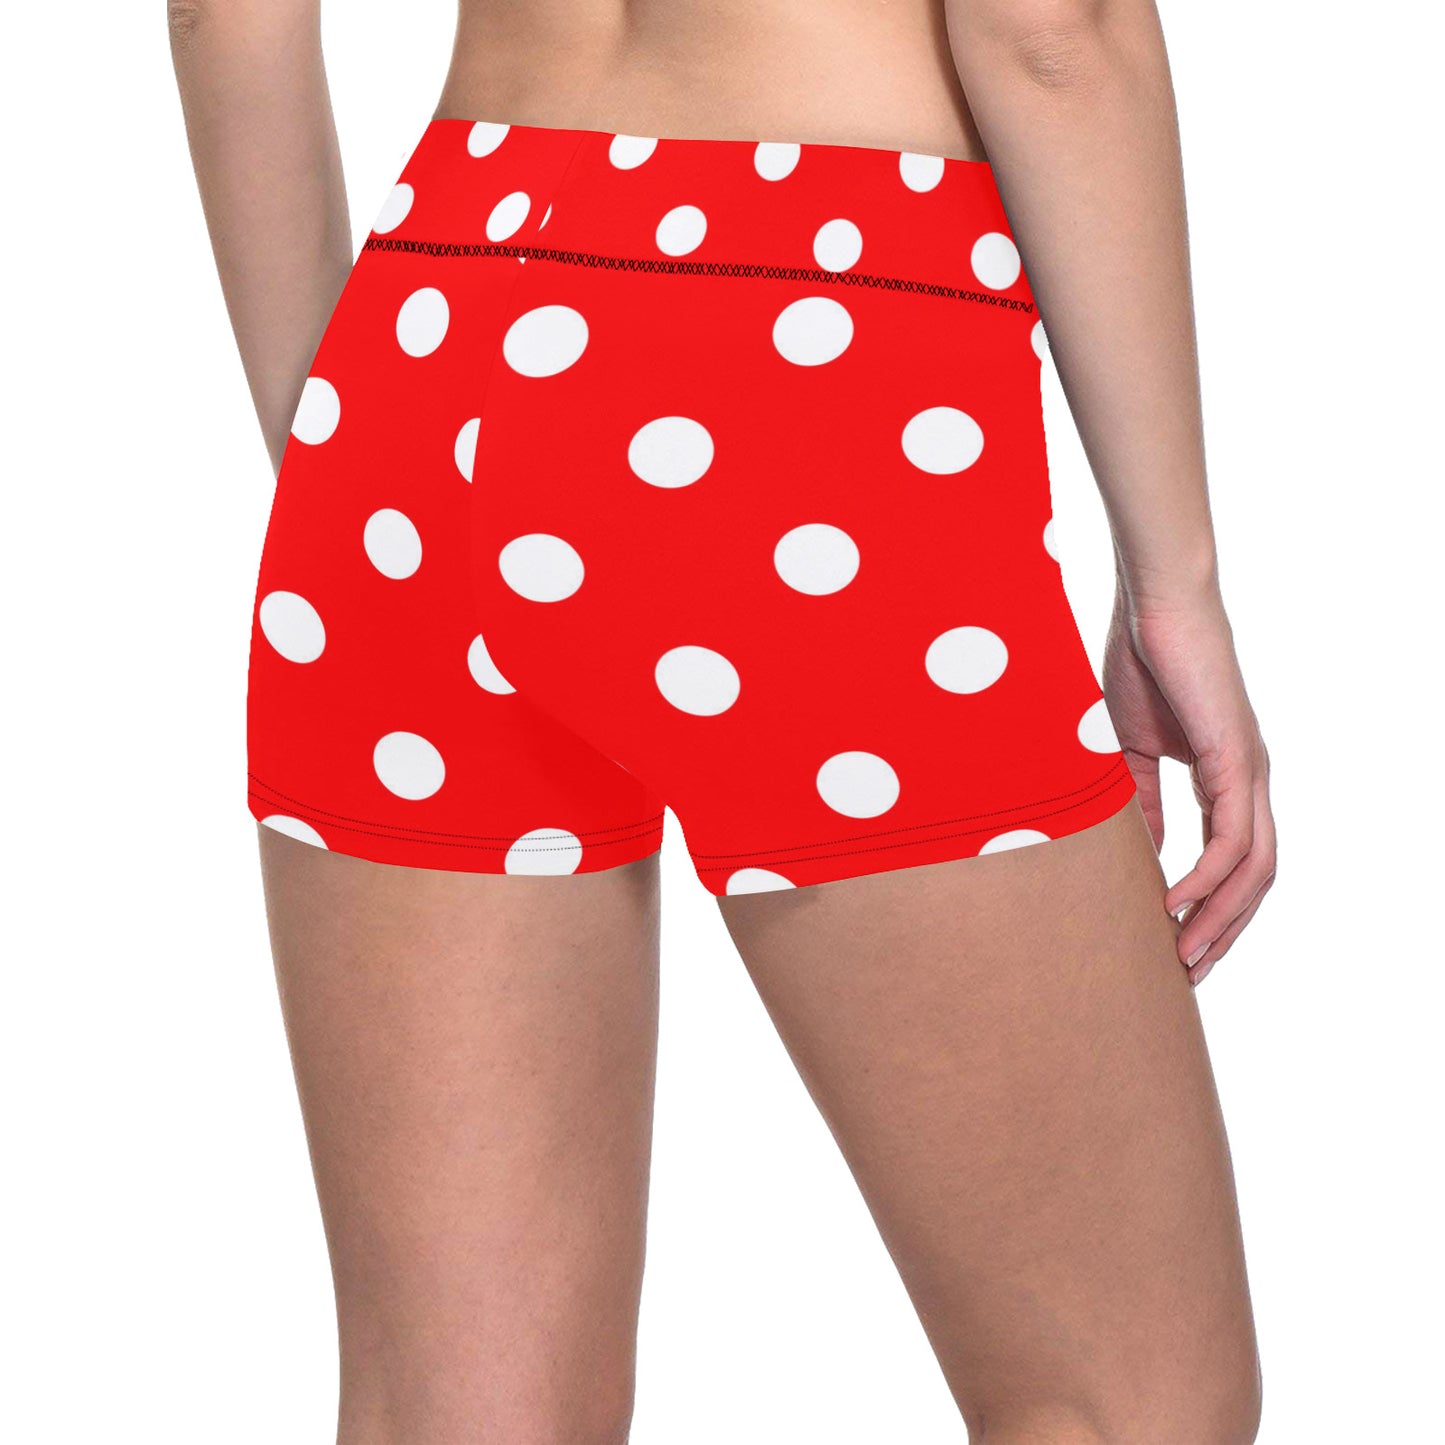 Red With White Polka Dots Women's Short Leggings